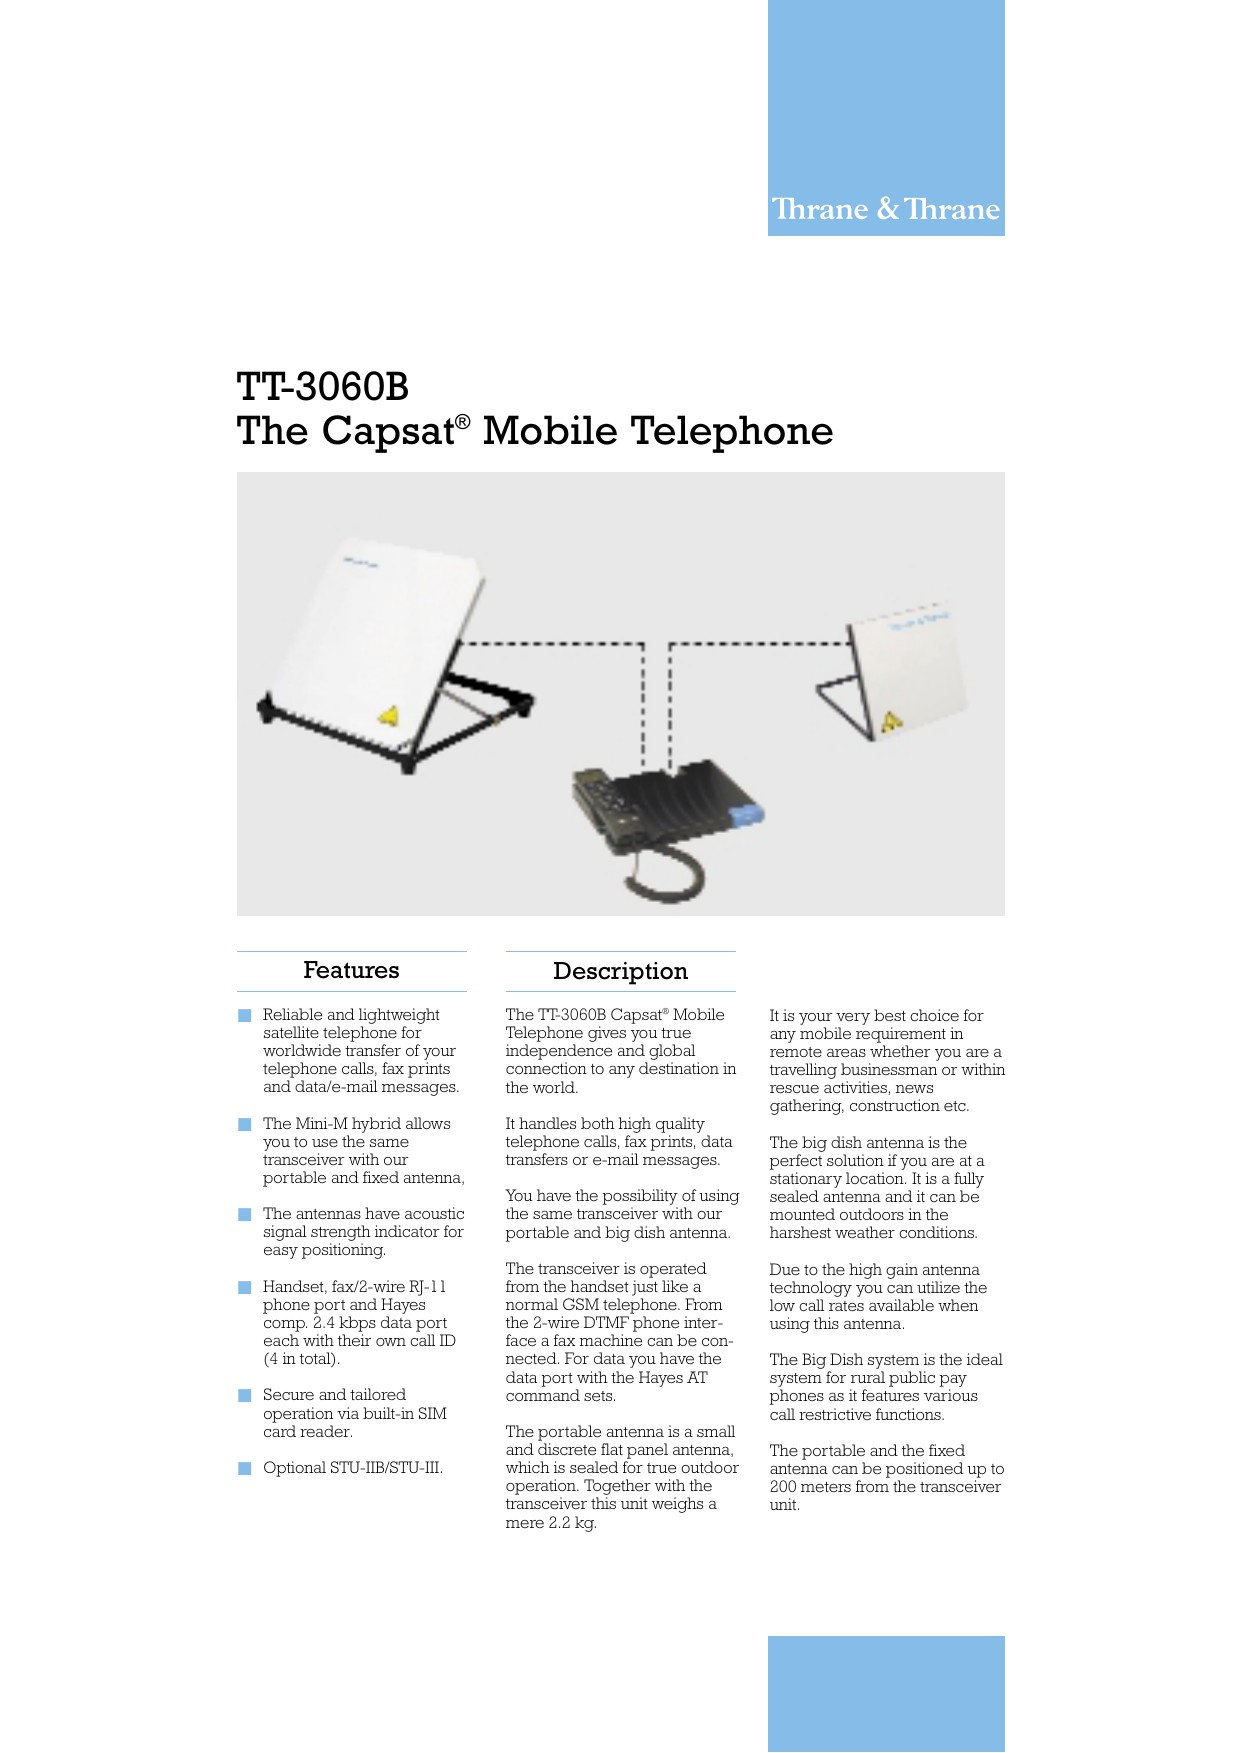 thrane and thrane capsat satellite telephone